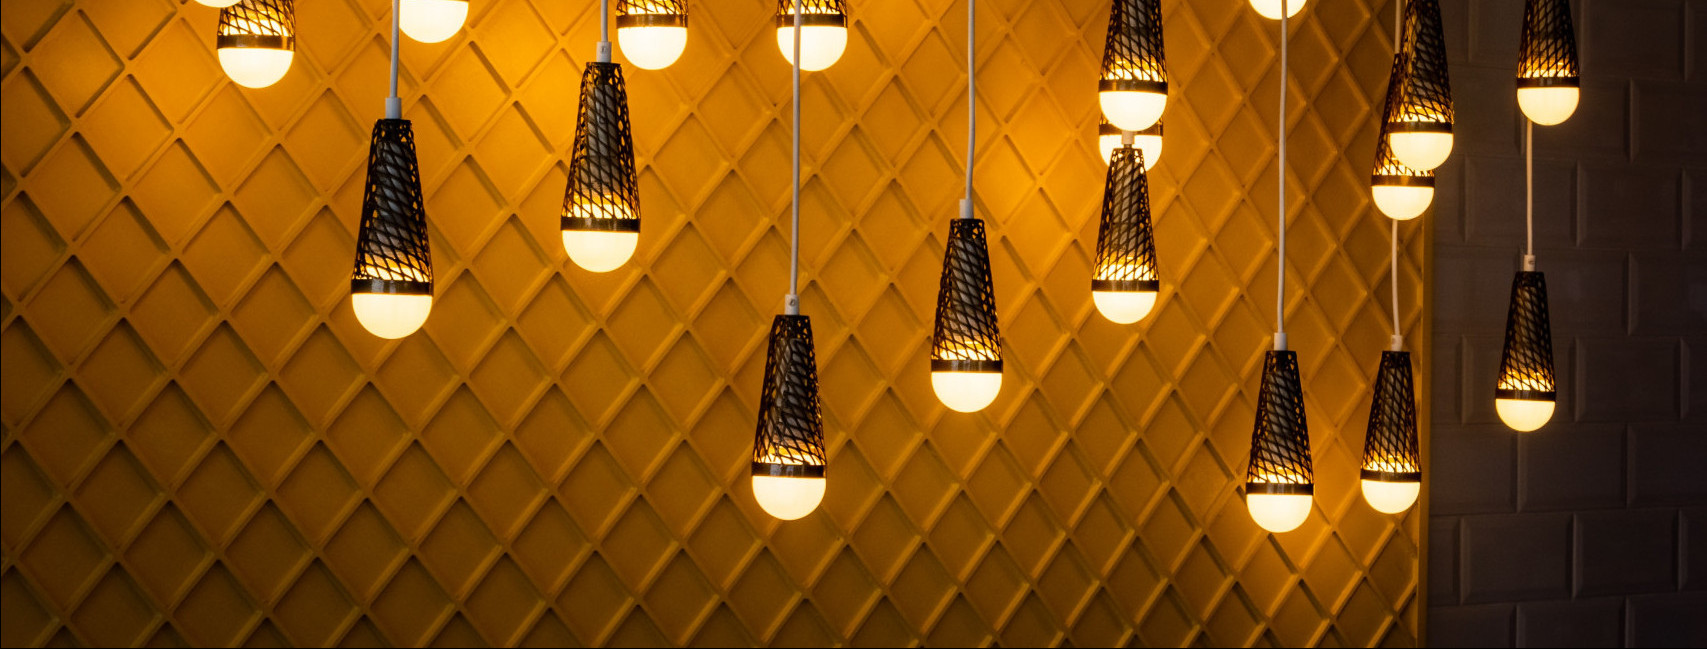 lampadas-luminaria-luz-pendente-projetar-estudo-iluminacao-casa-ambientes-comodos-teto